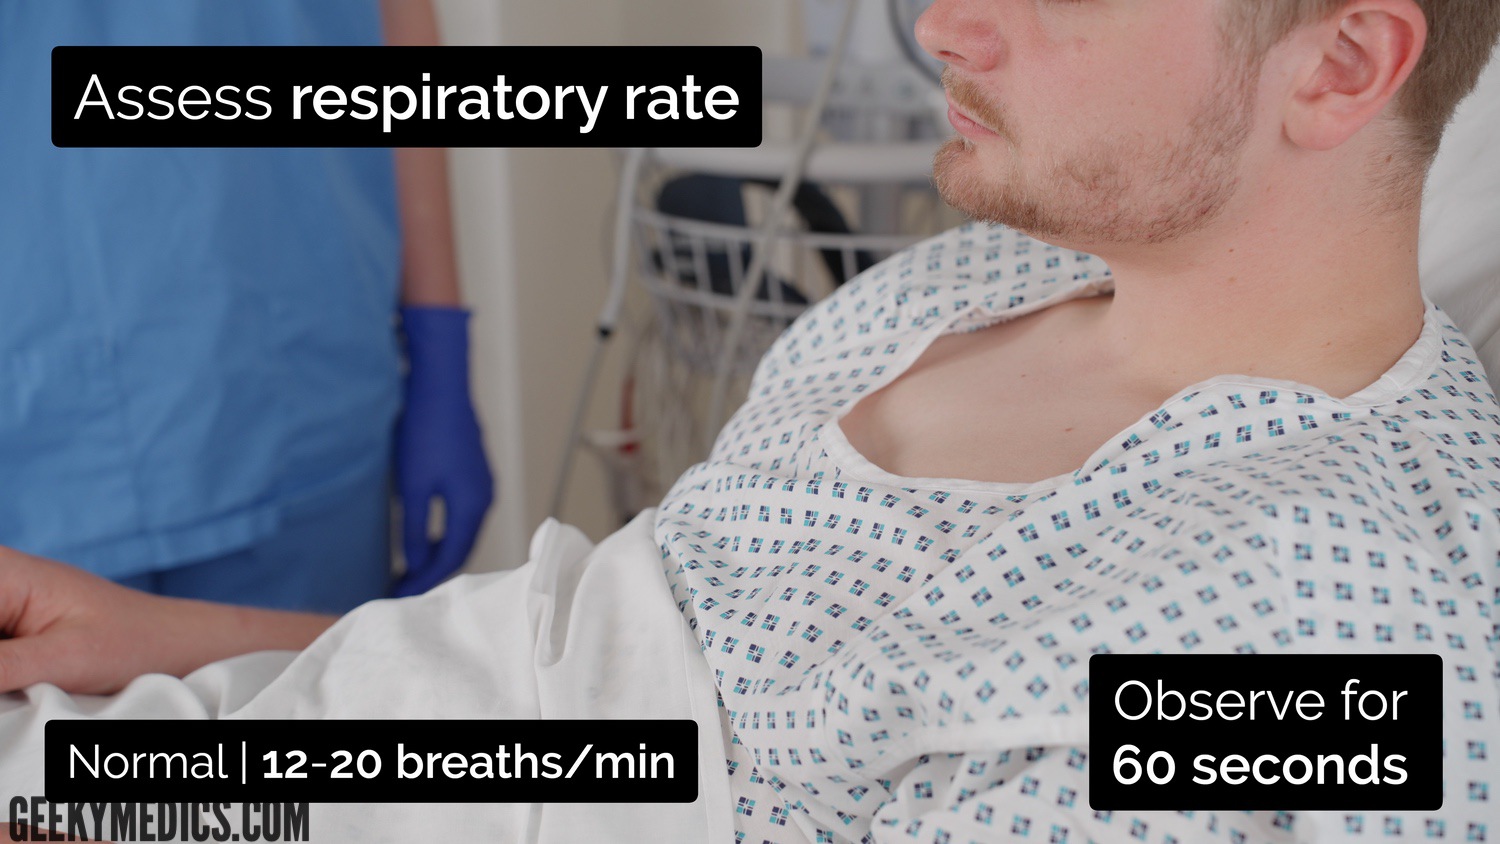 Measuring vital signs - assess respiratory rate